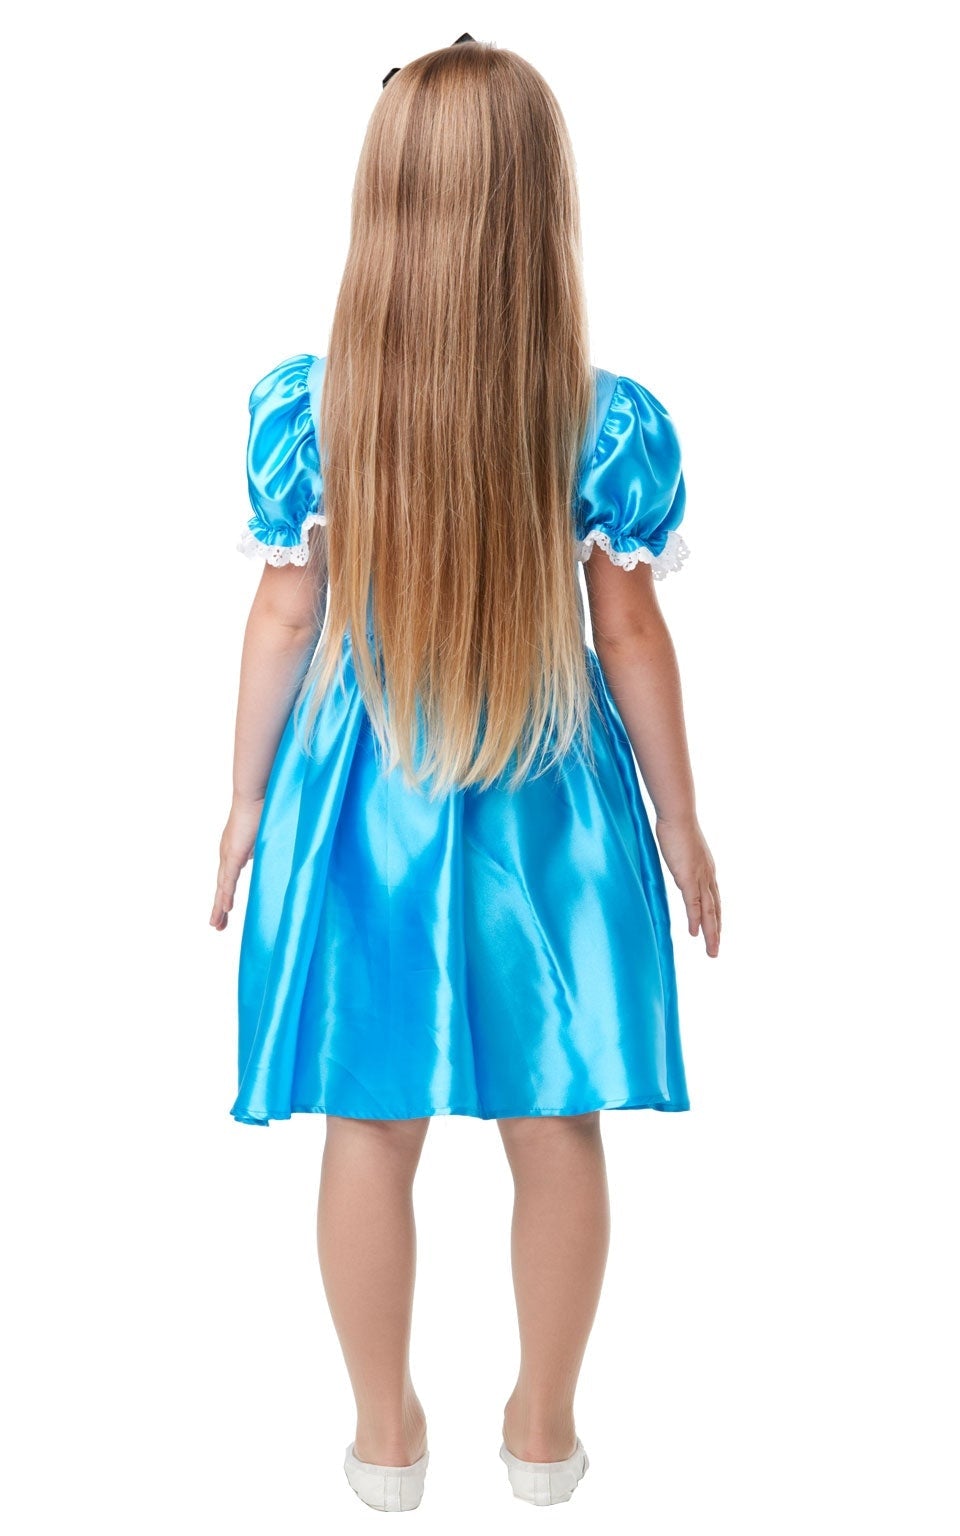 Alice In Wonderland Girls Costume_3 rub-641005S